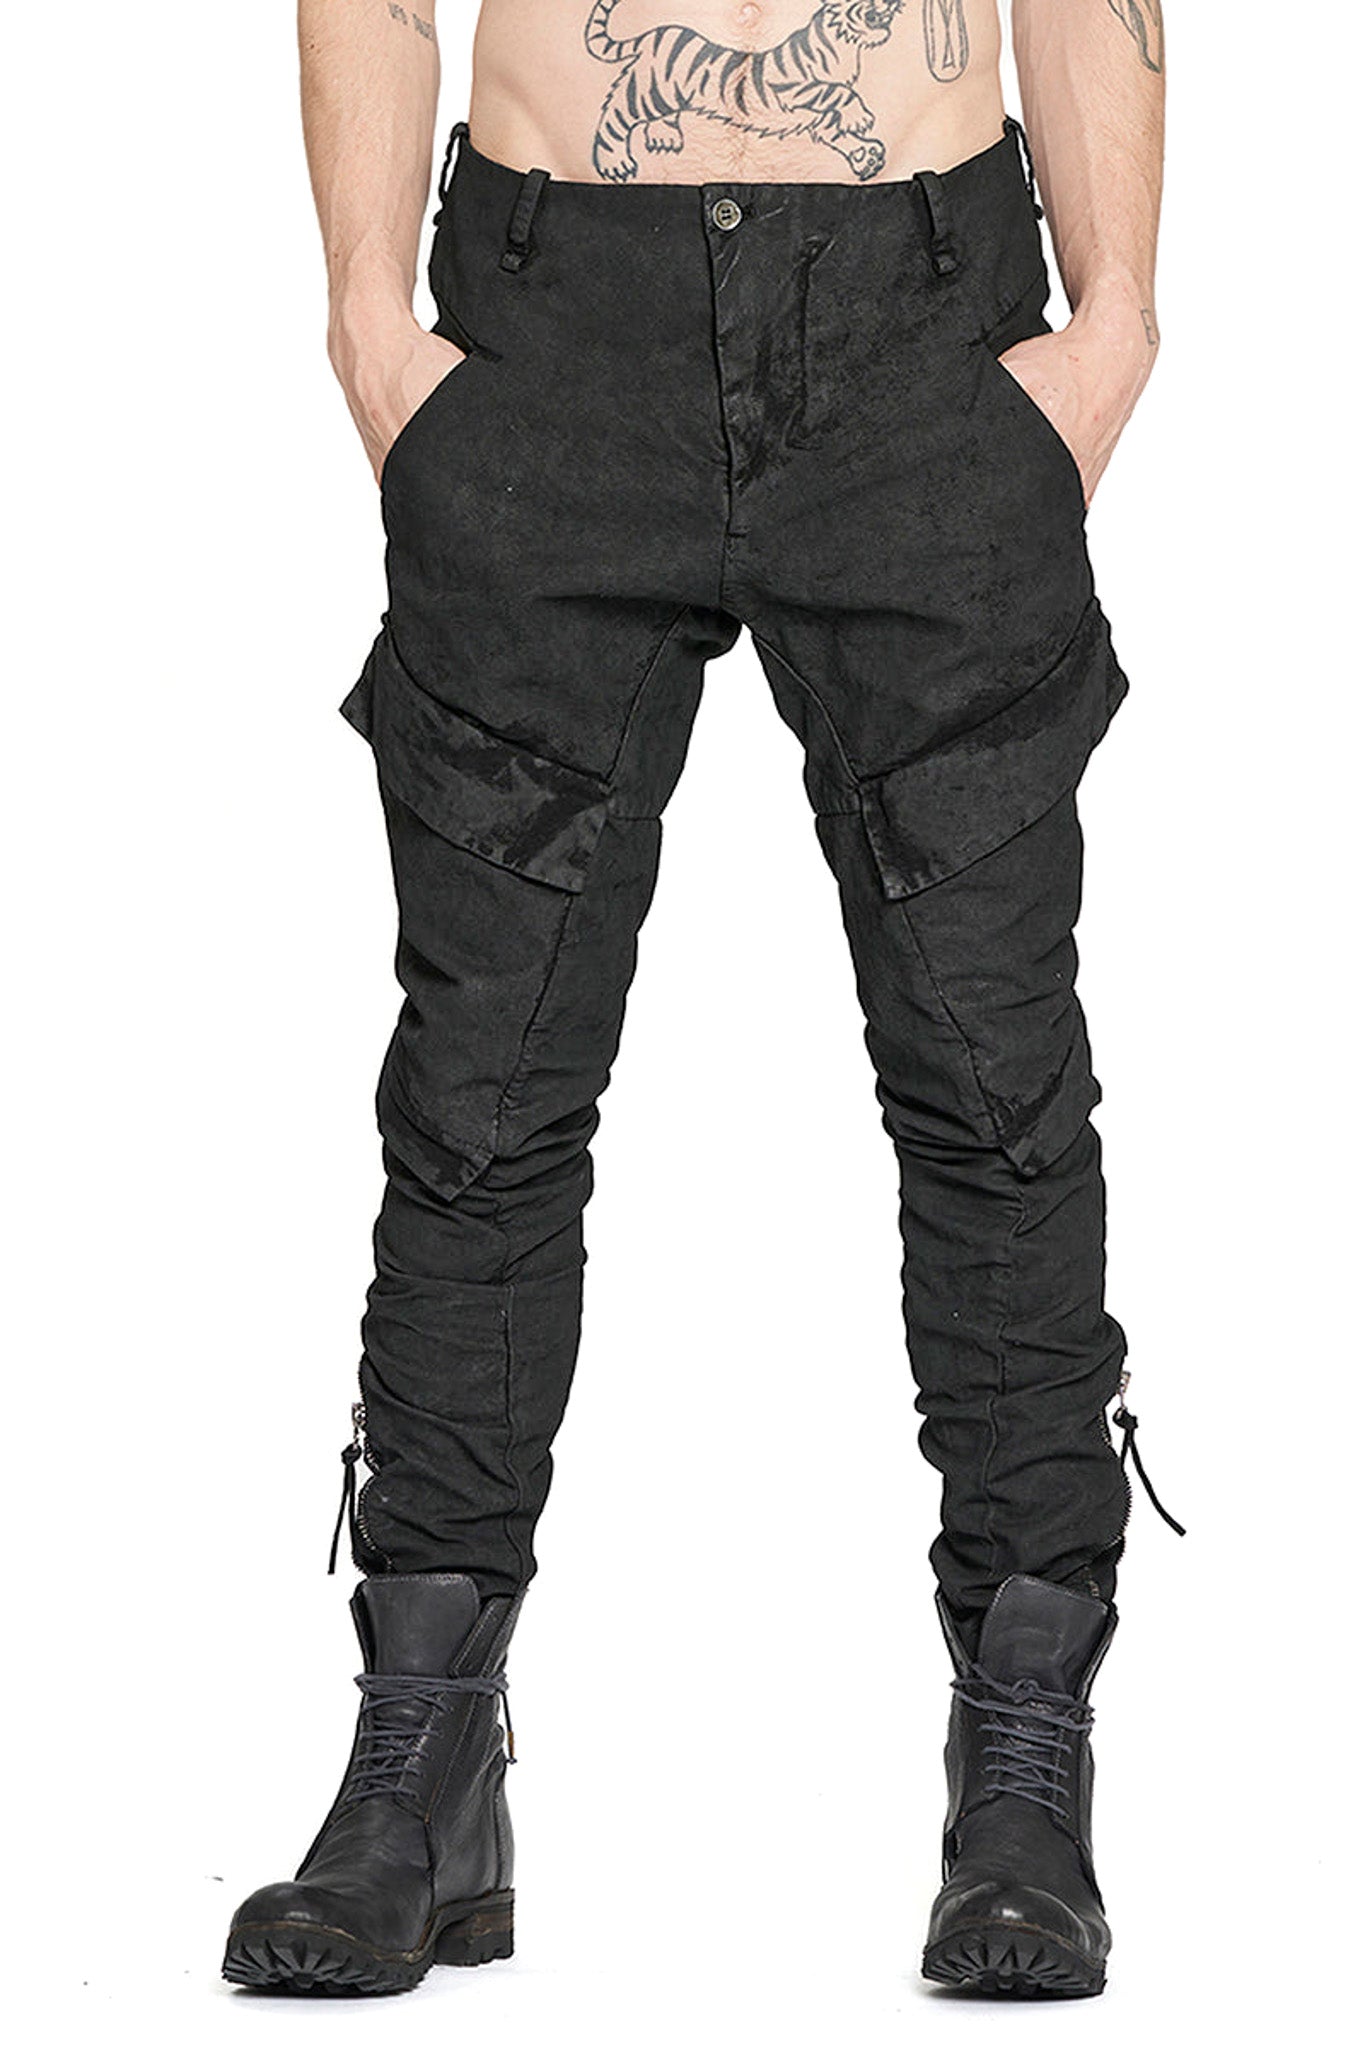 Black Cargo Pants, Black Cargo Pants Online